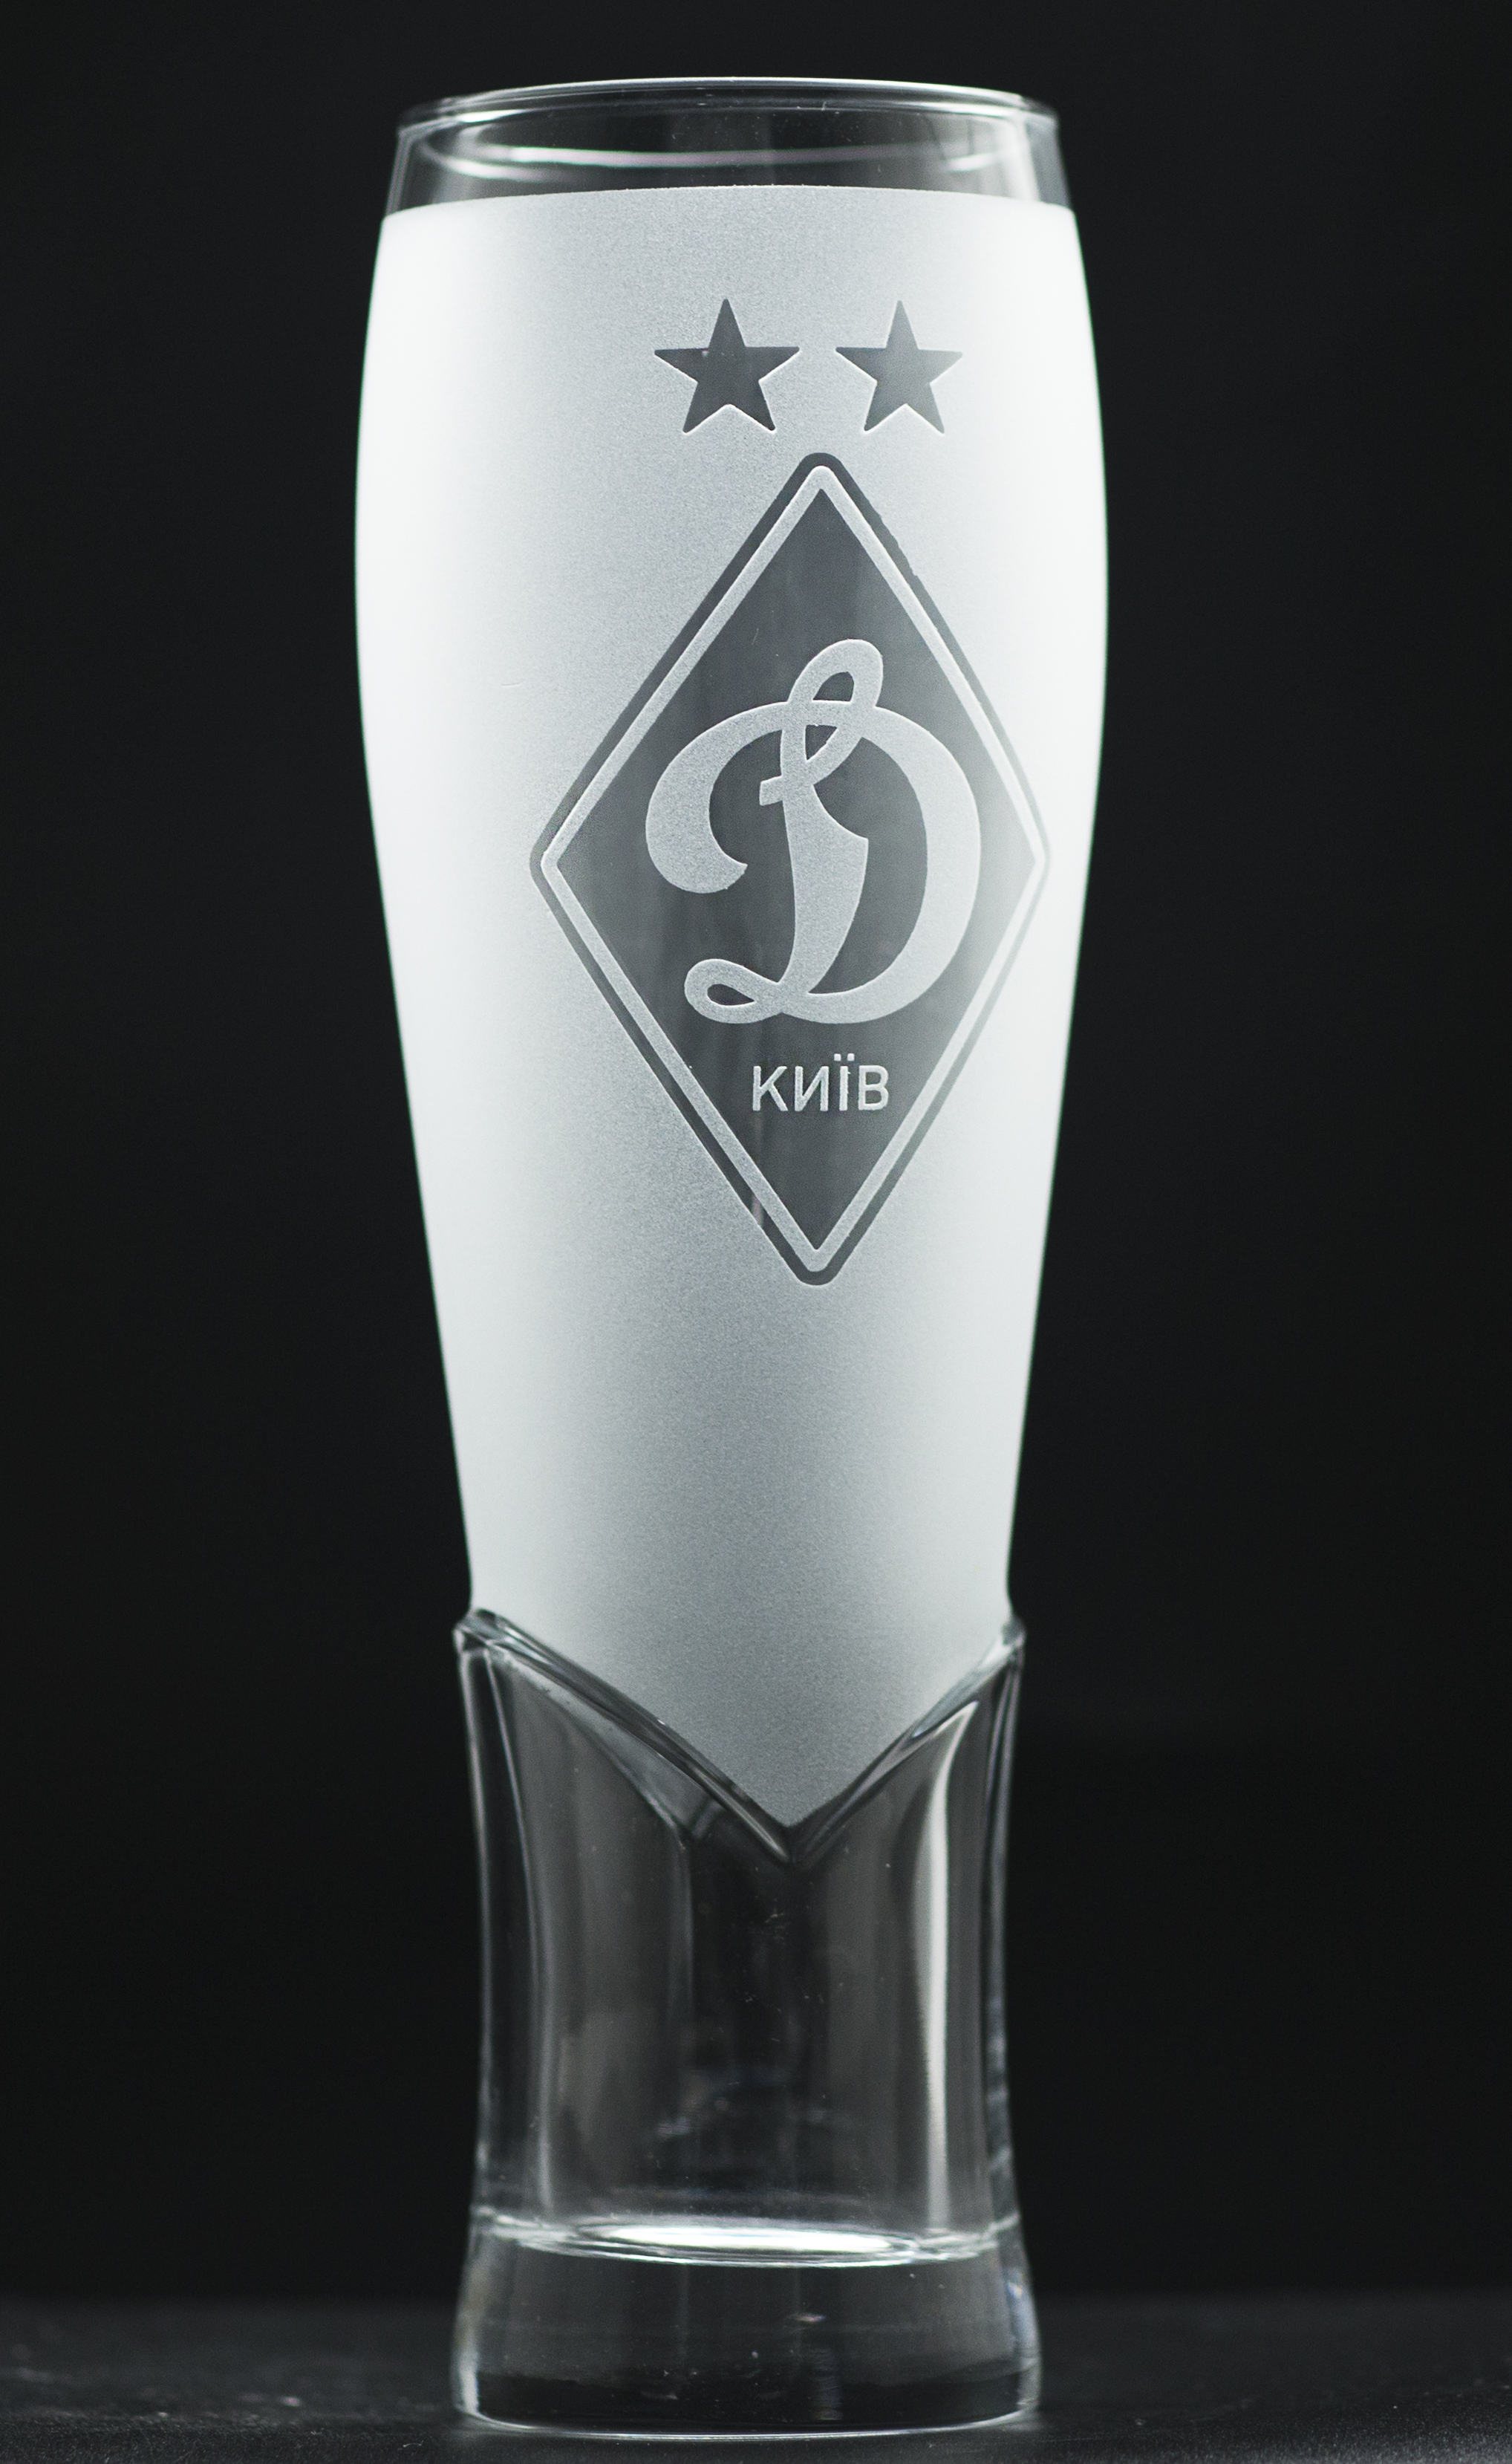 DK Beer glass